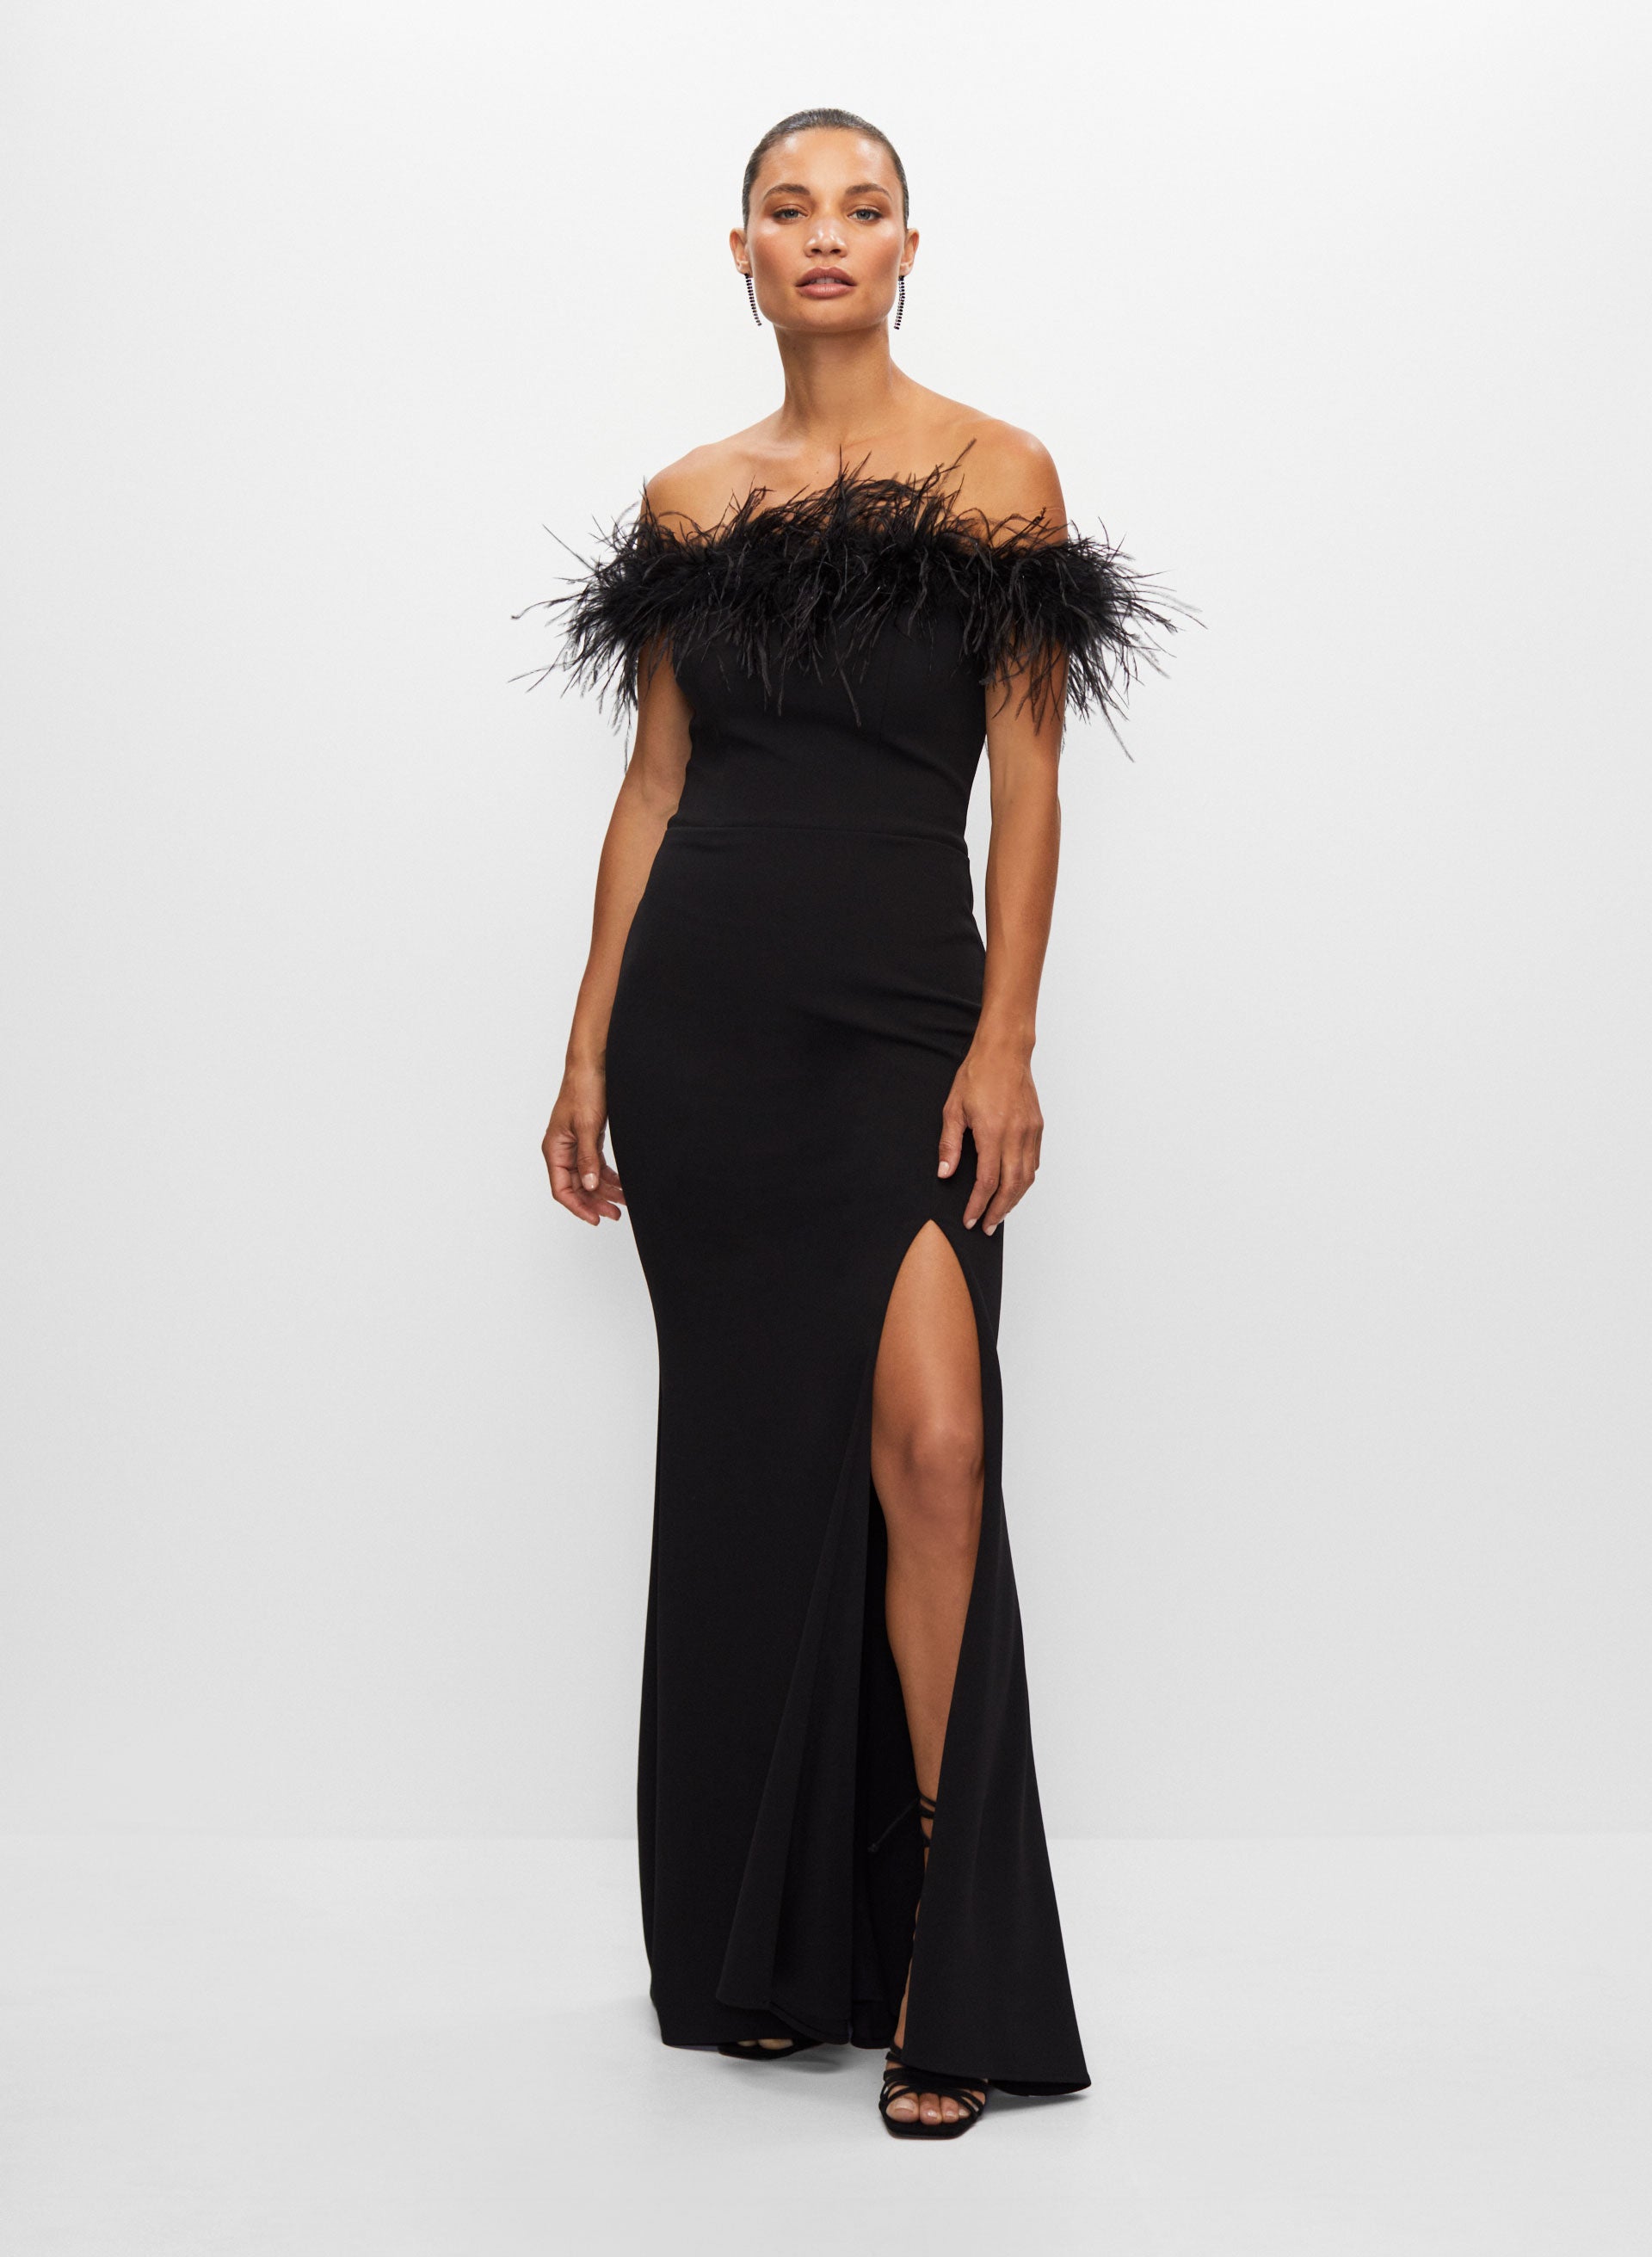 Black feather dress